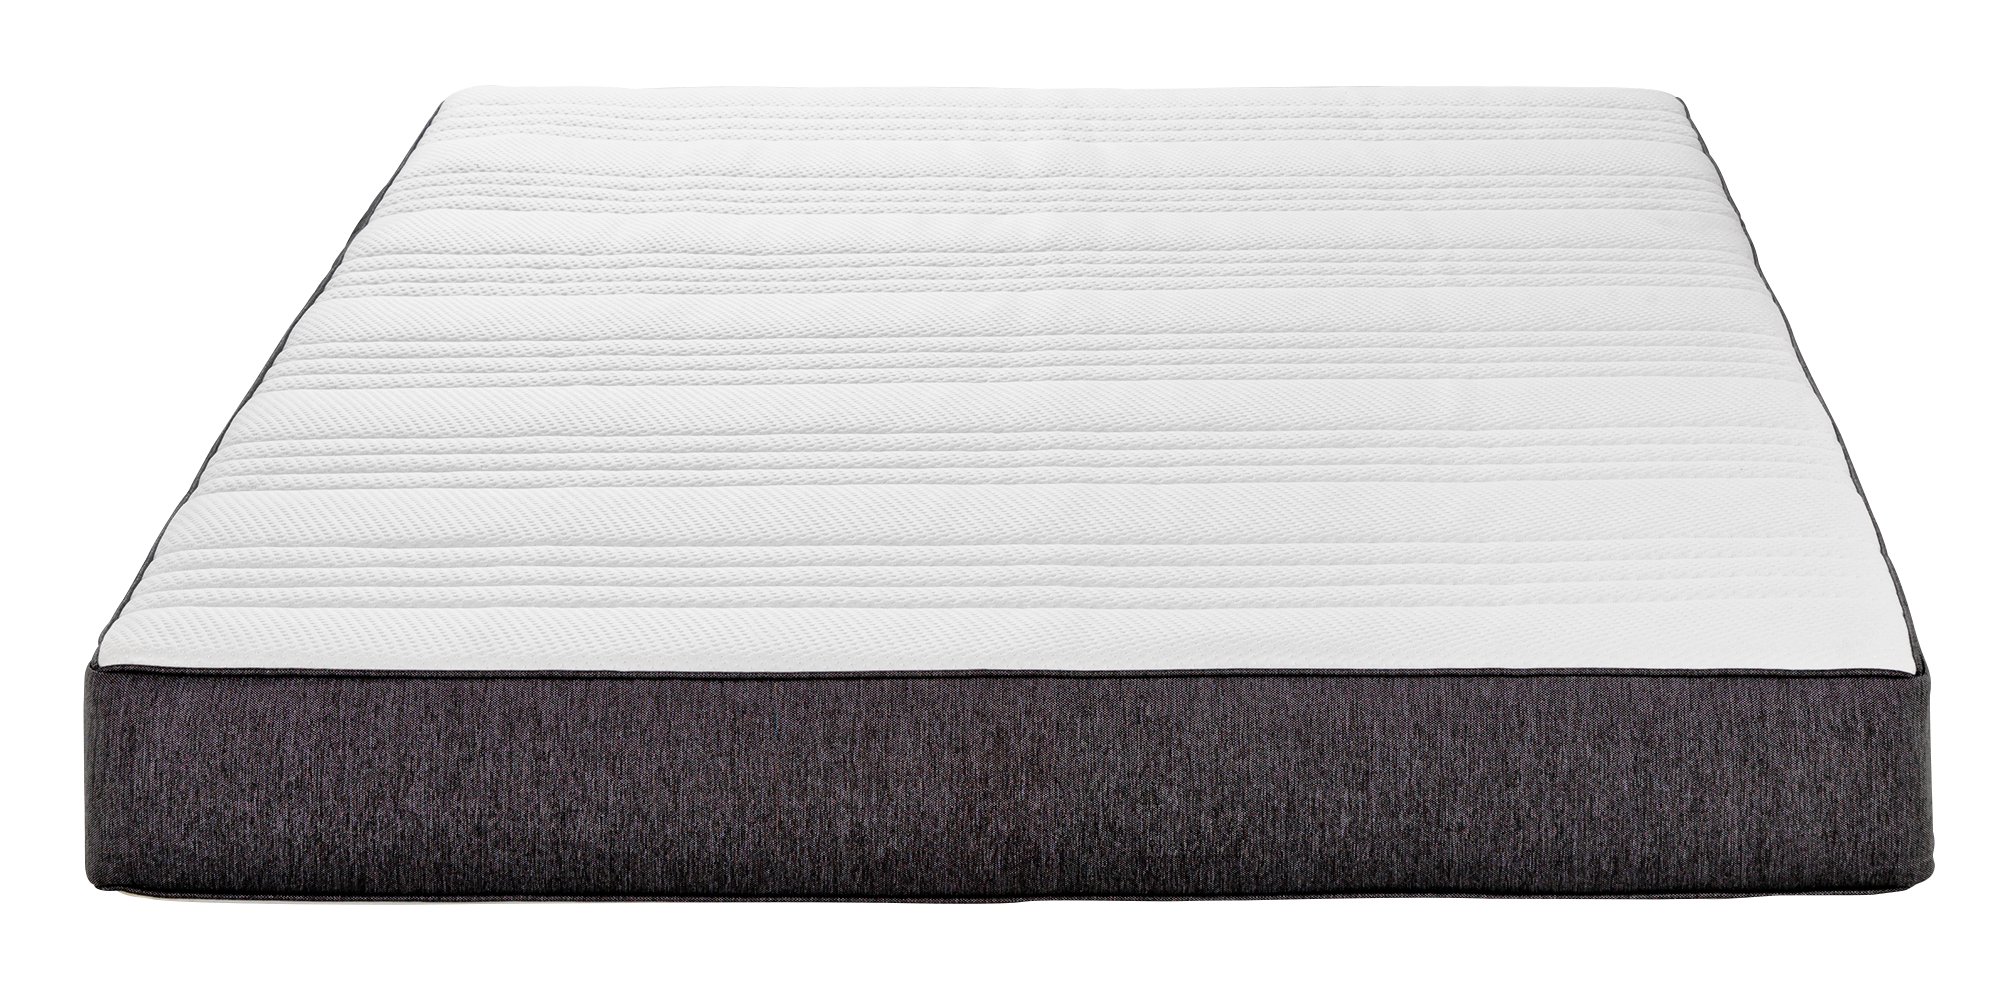 i sleep mattress argos reviews